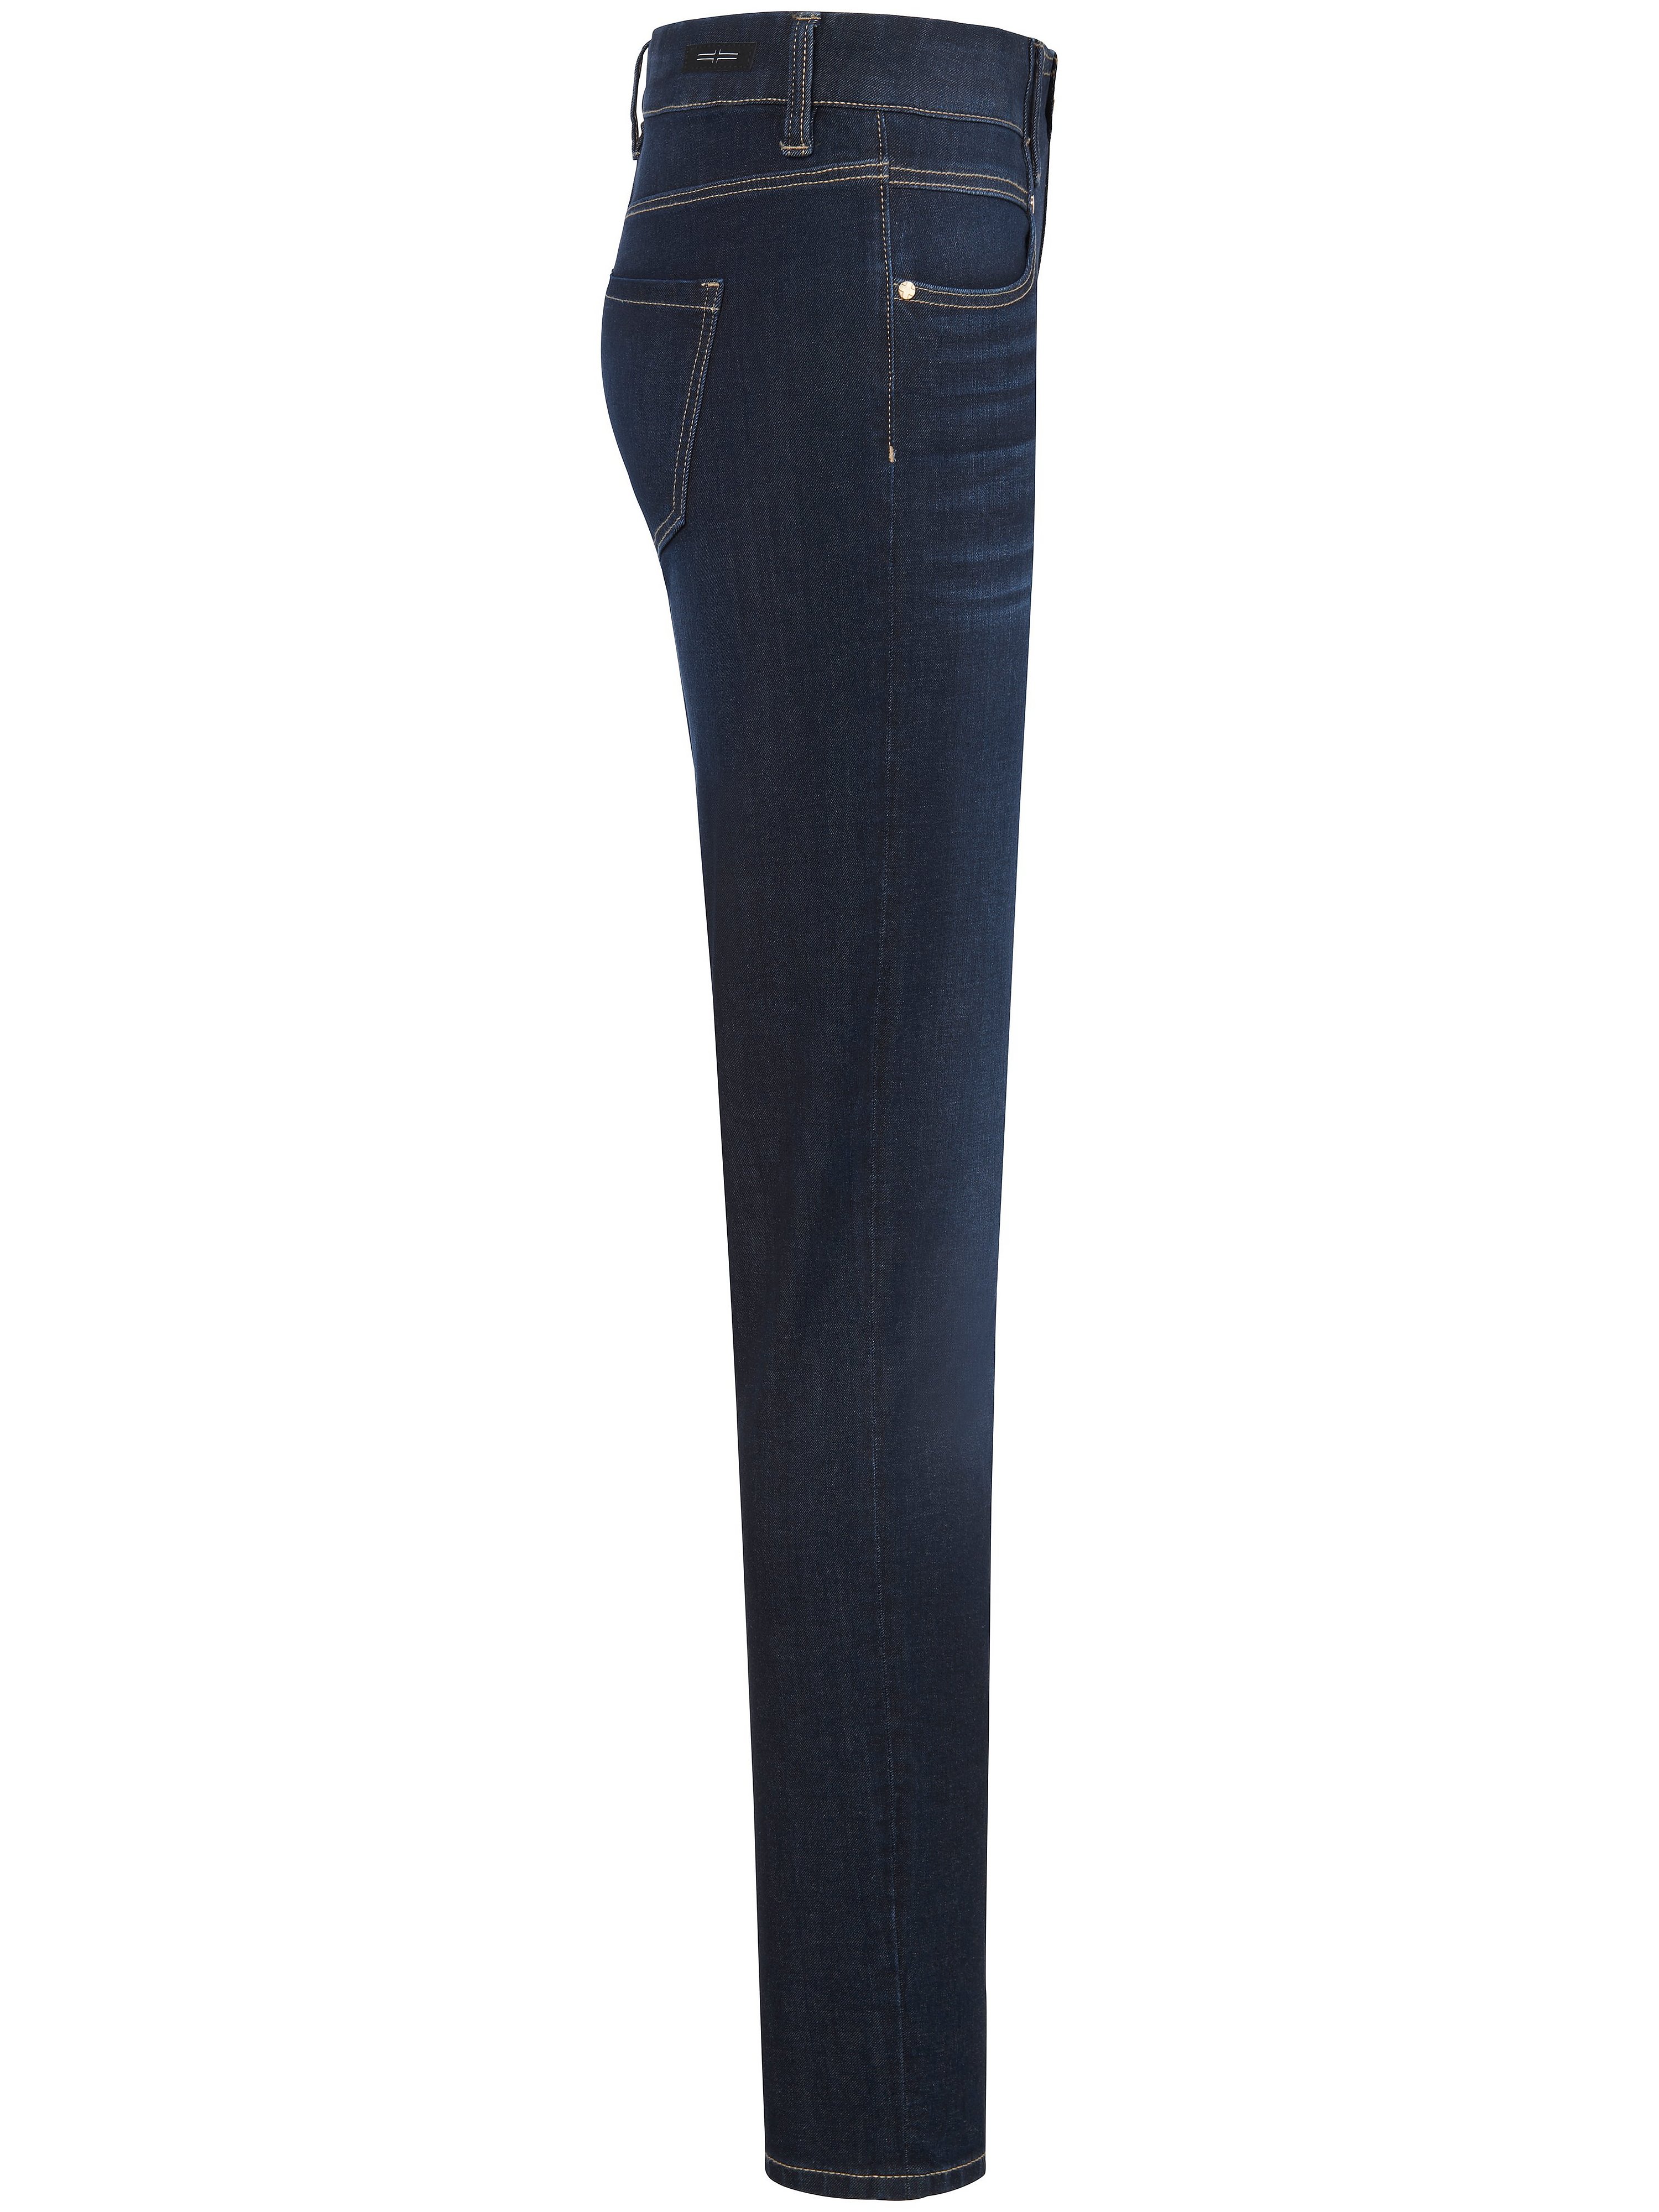 Jeans model Gia Glider Skinny Fra LIVERPOOL denim